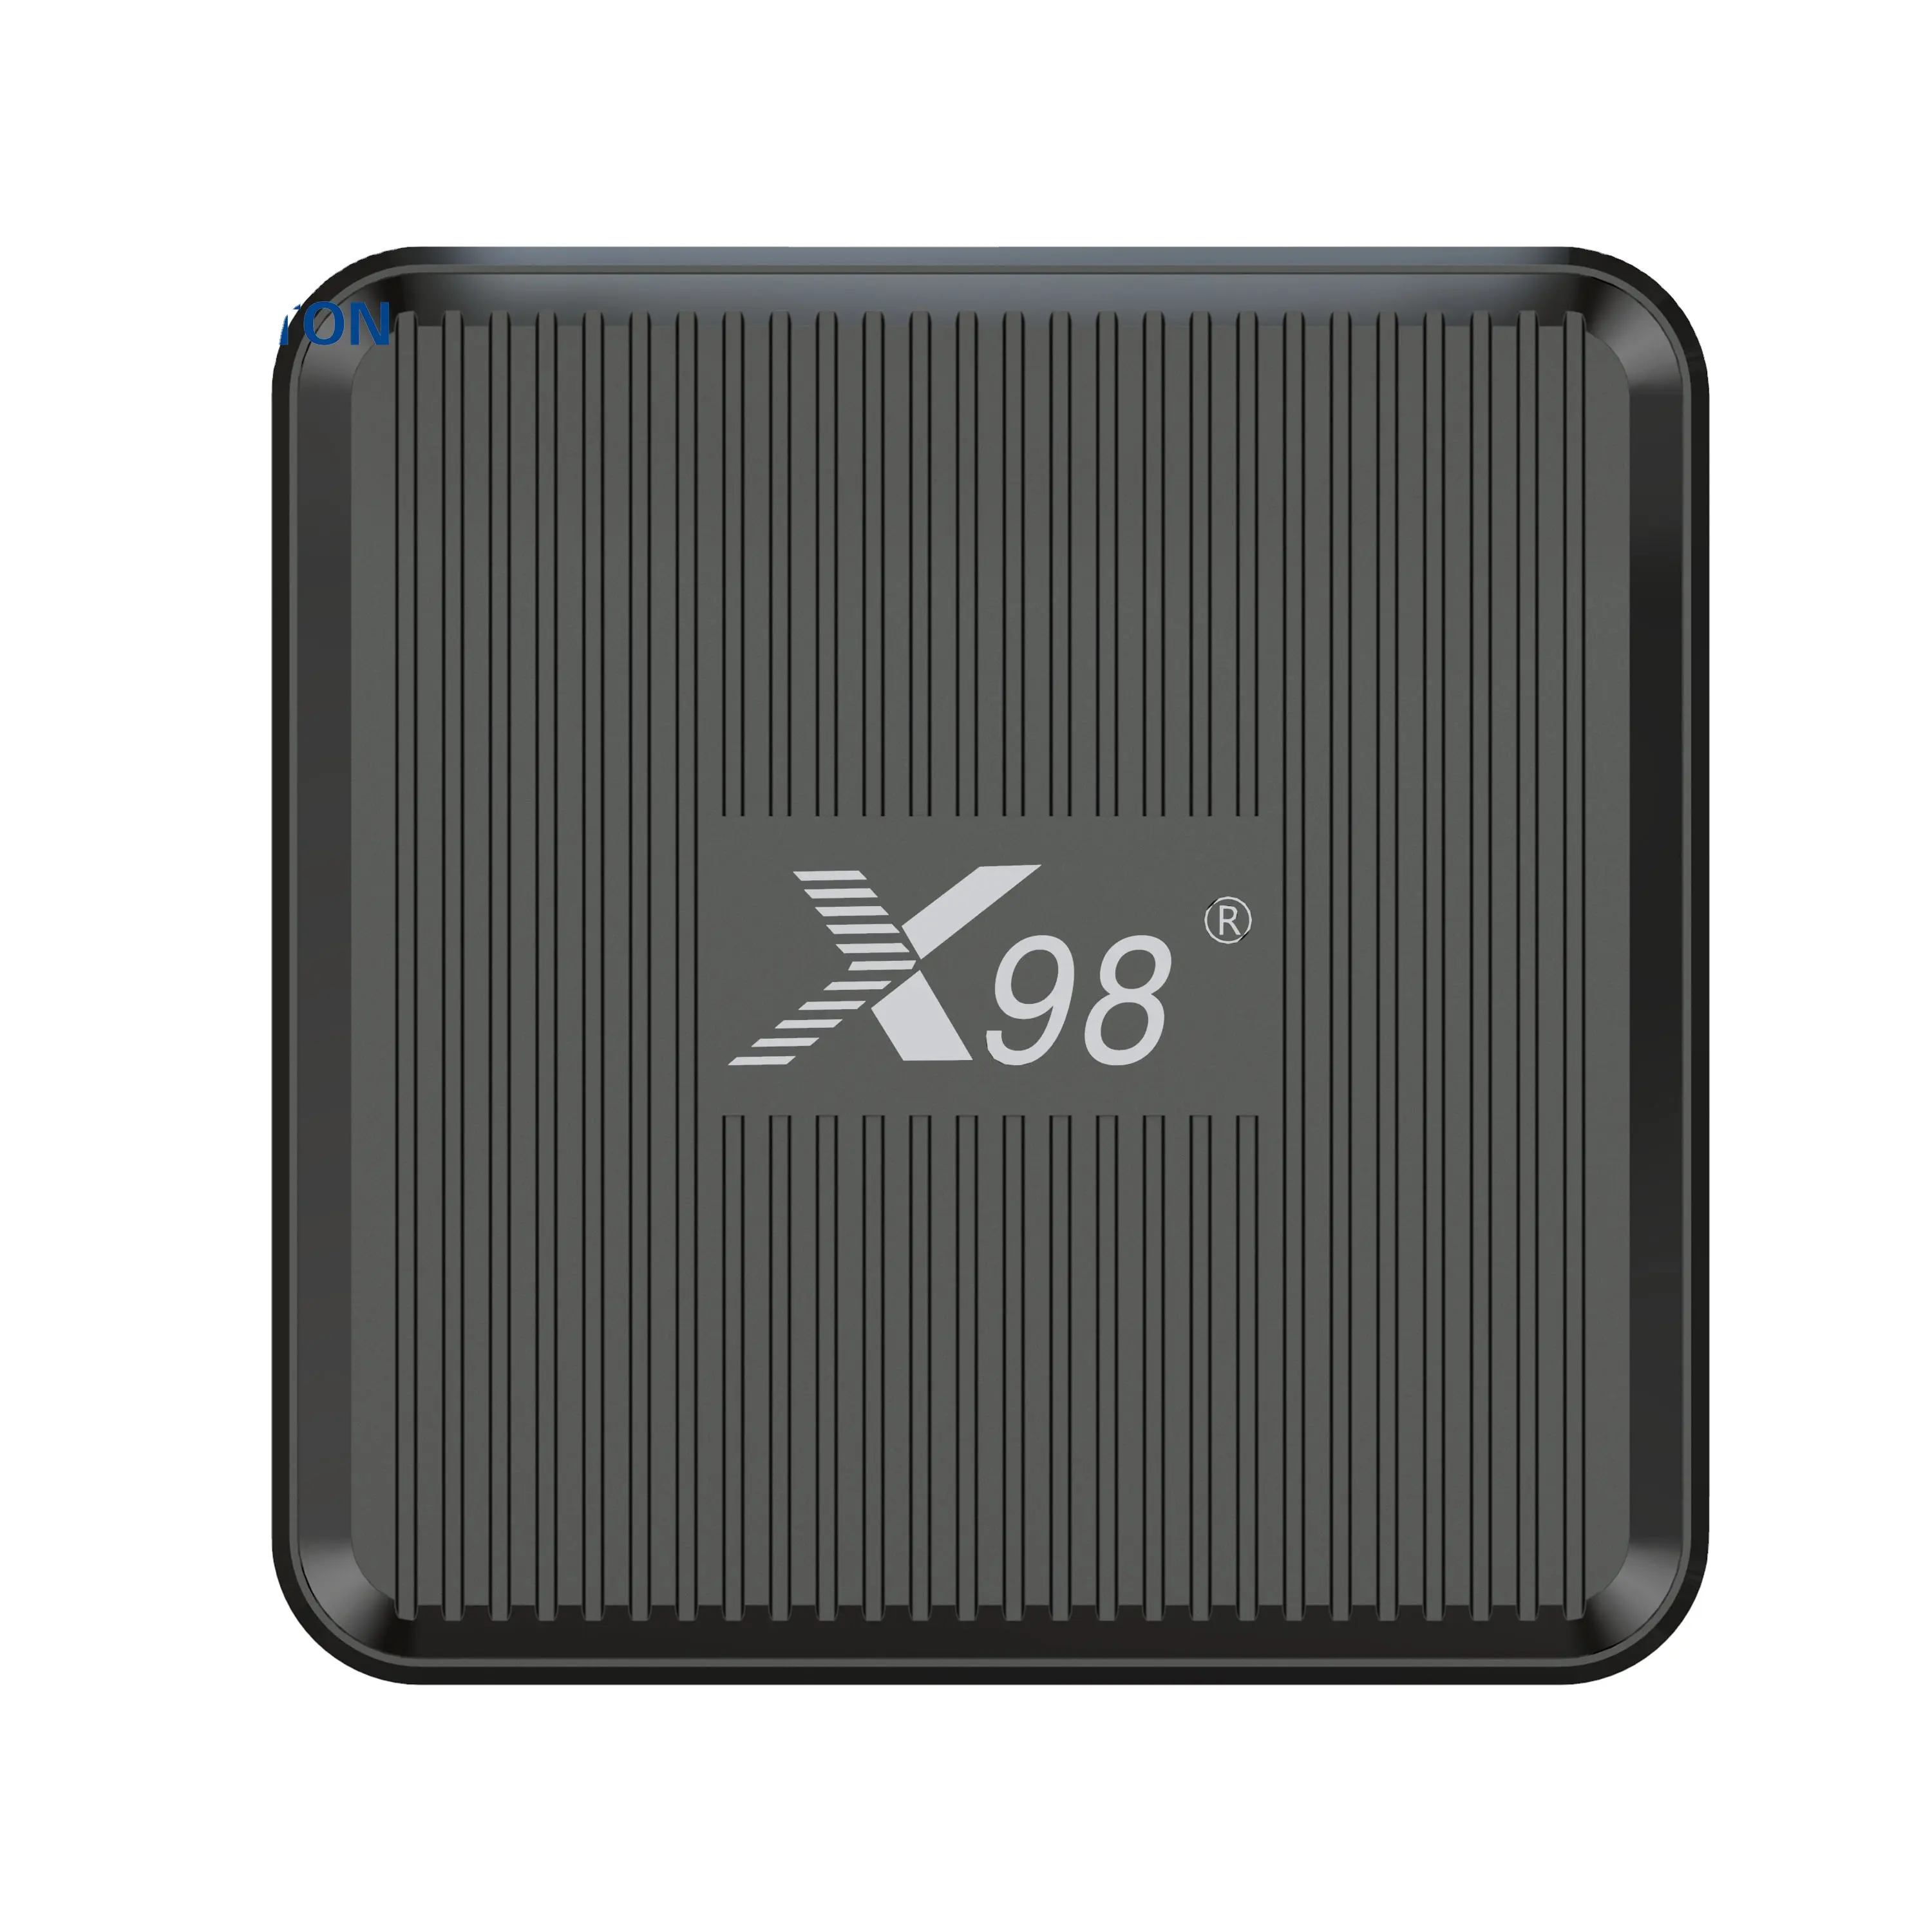 Ott האחרון אנדרואיד 10 מיני גודל הטלוויזיה Box Media Player 1GB 8GB תמיכת Youtube משחקים סט X98Q 4k Quad Core 4k Usb 4k Wifi